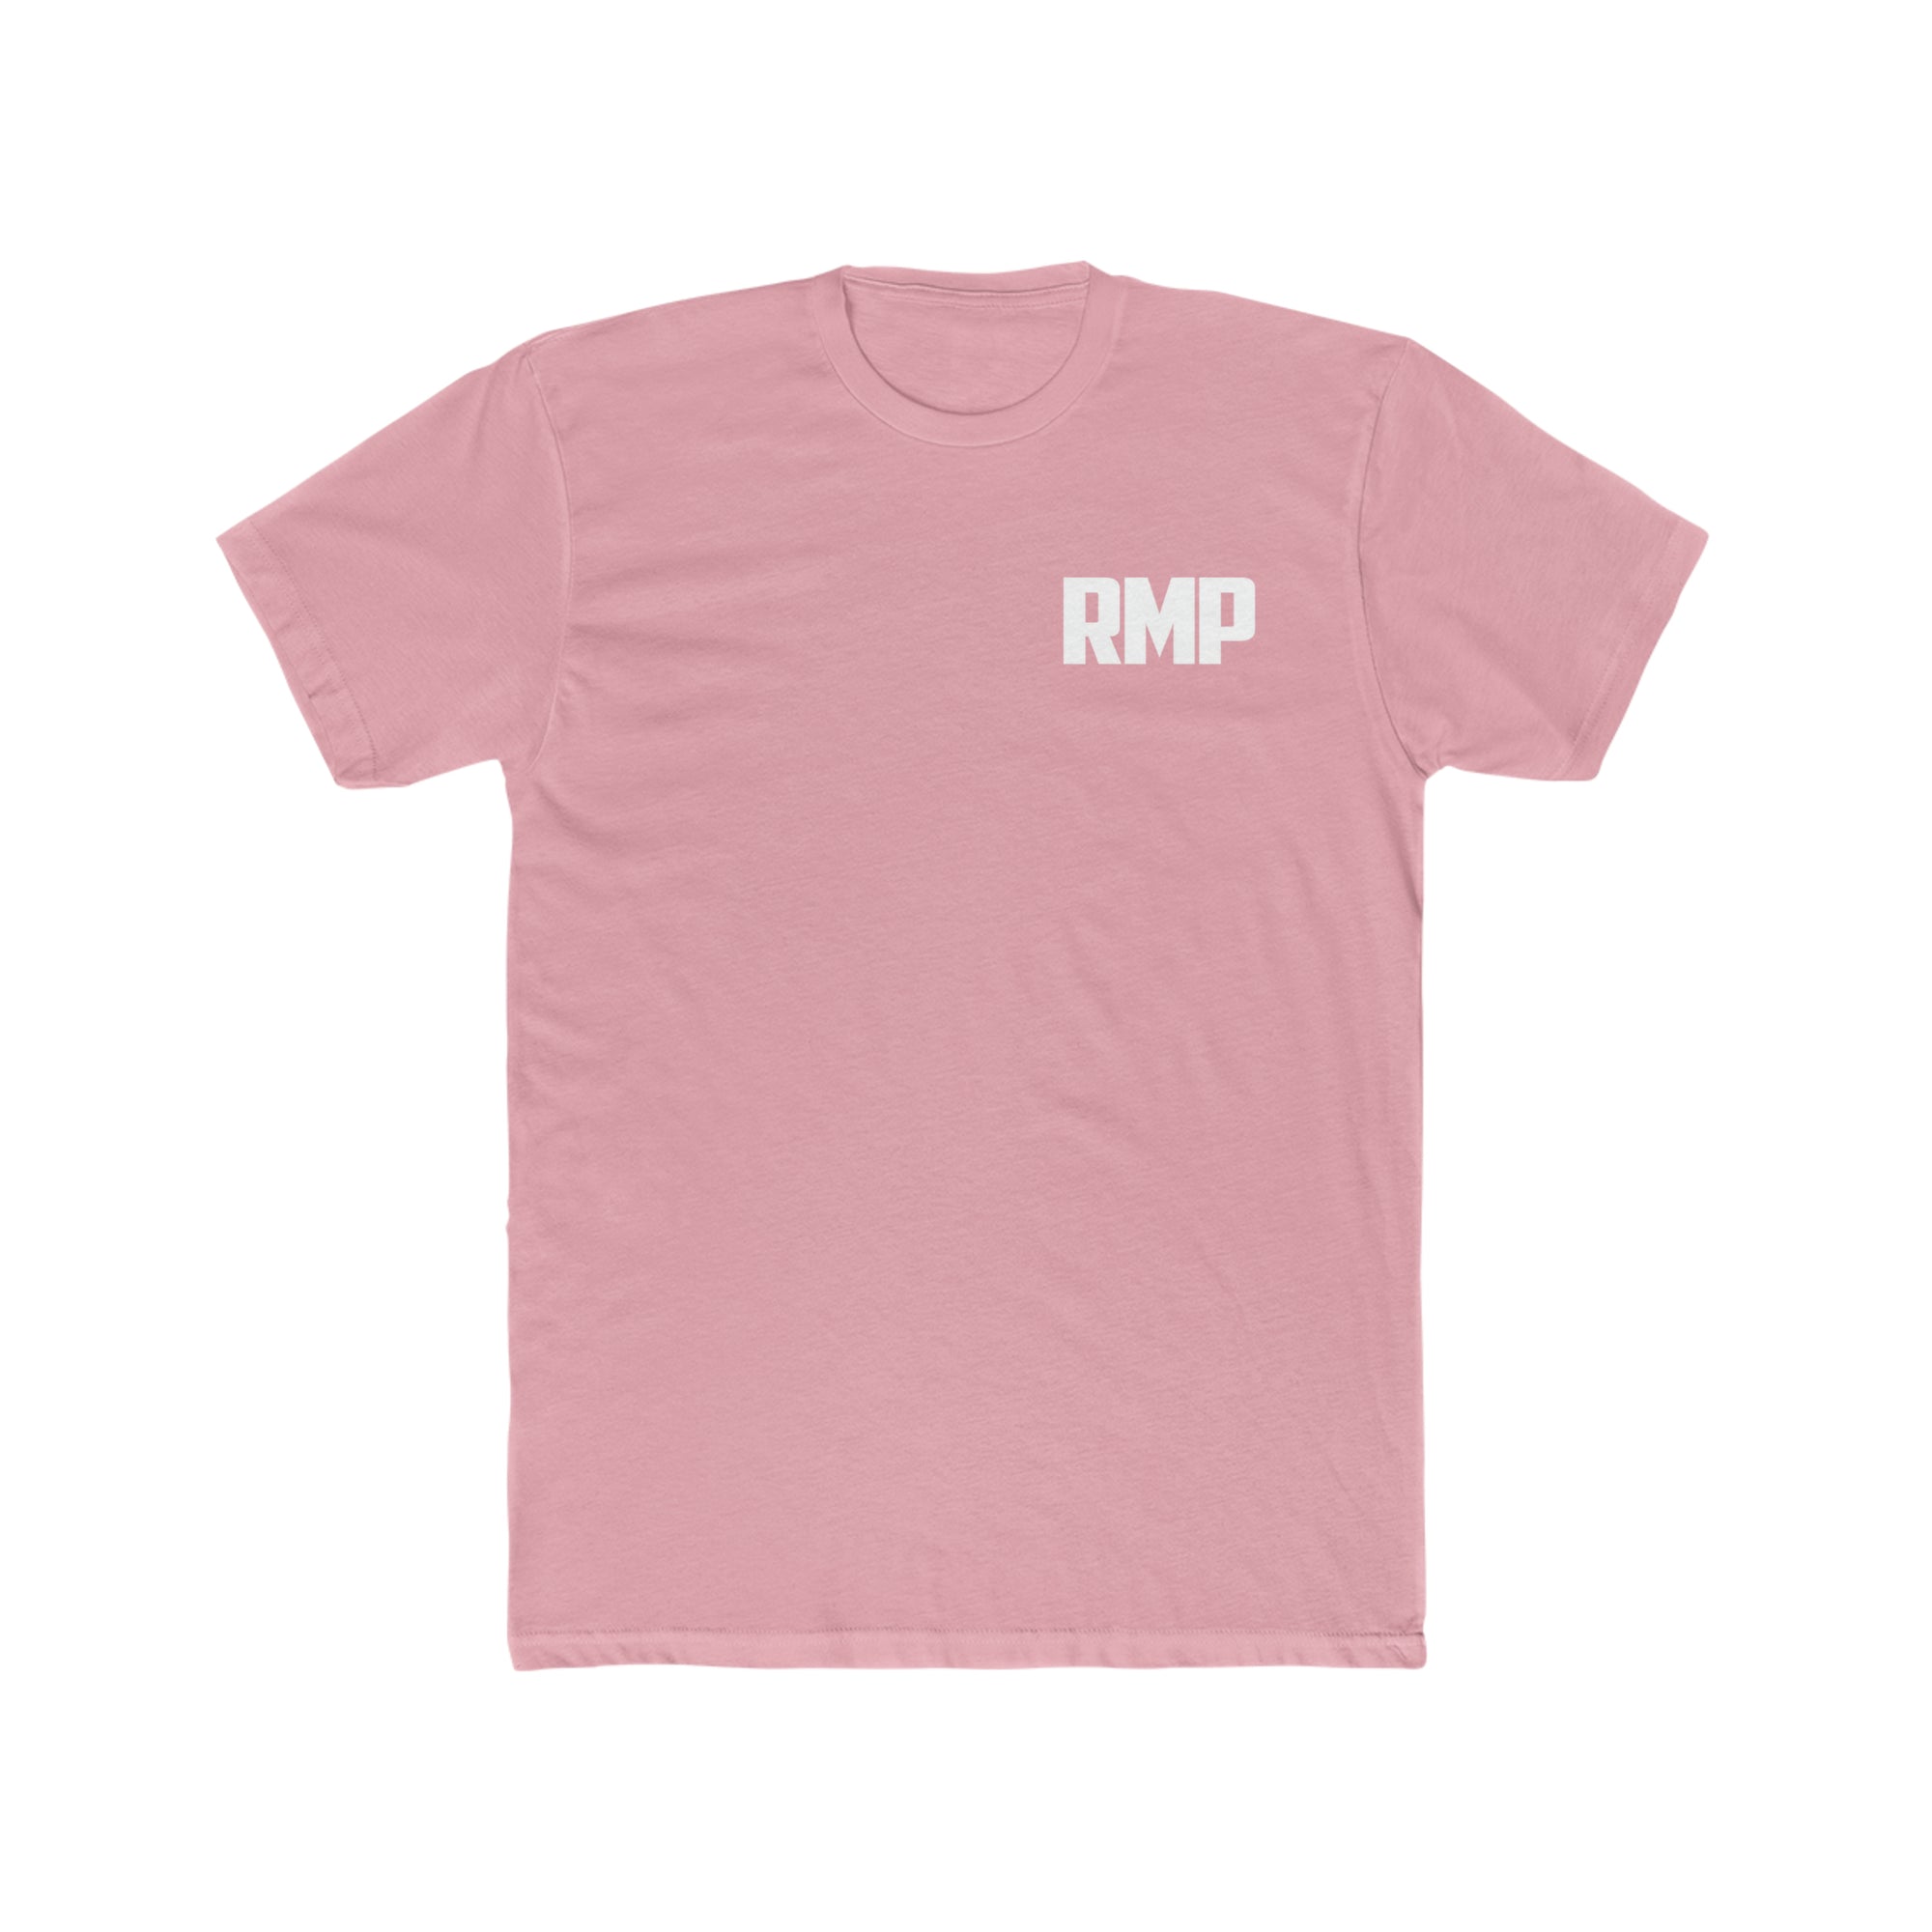 RMP OG Weightlifter Tee in Pink